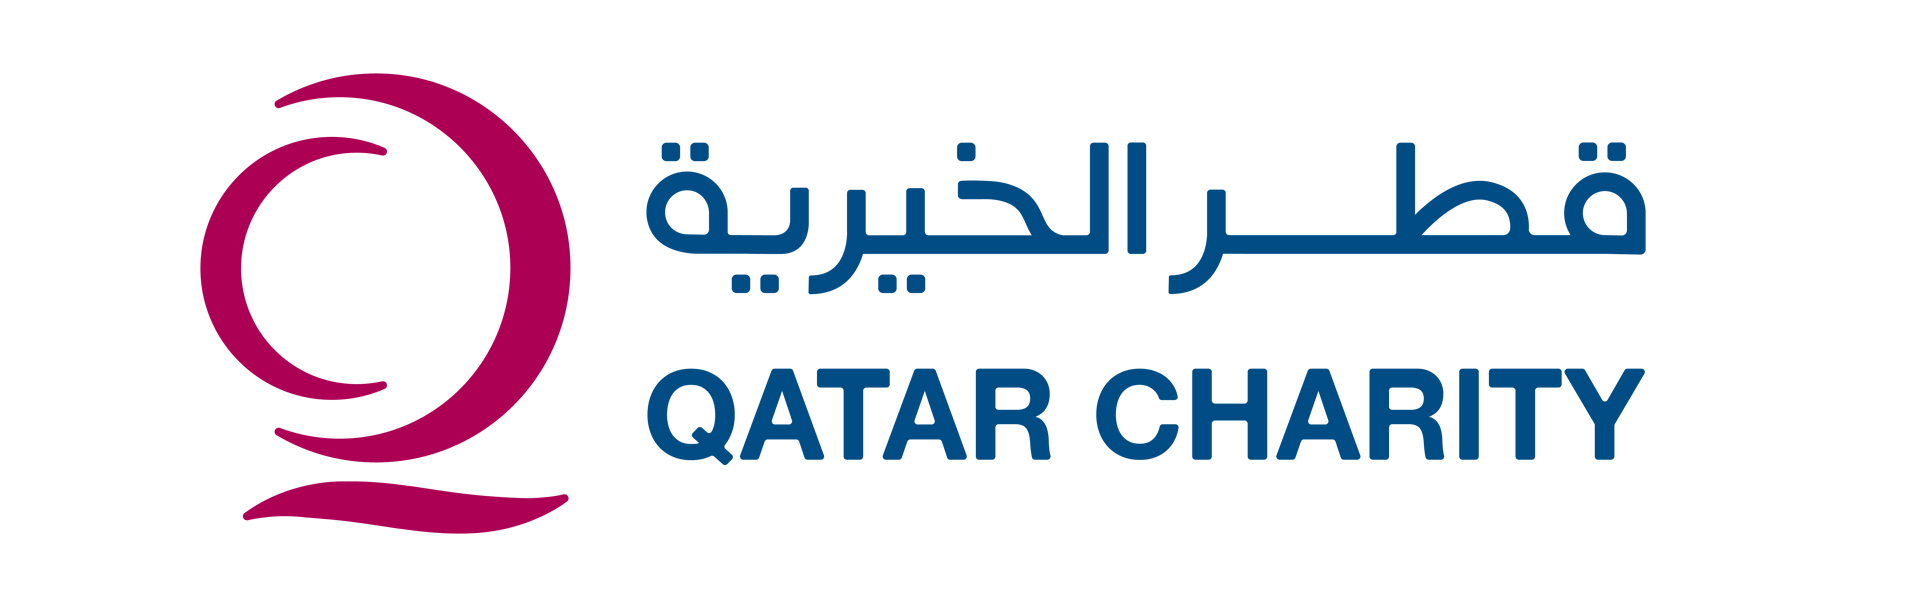 Qatar Charity, Islamic Relief distribute medical supplies to 80 quarantines